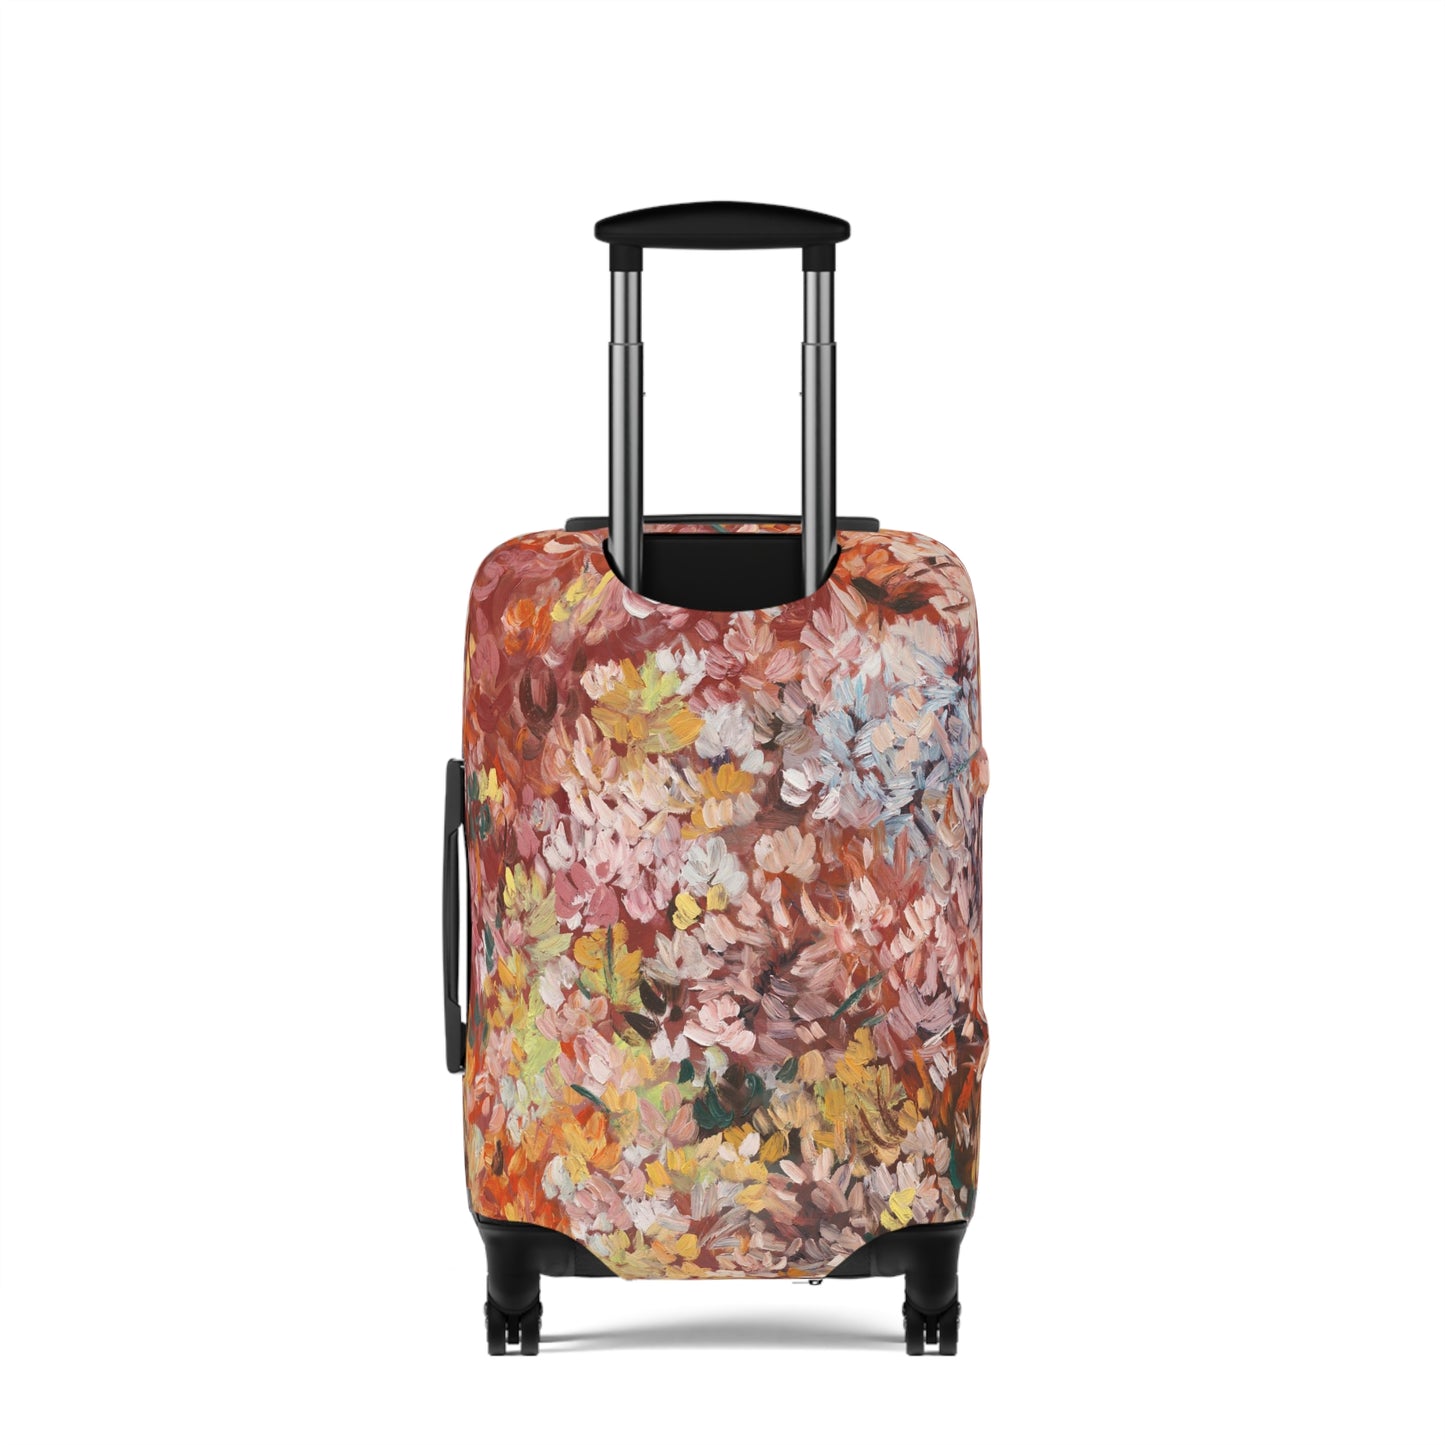 Paraburdoo Dreaming Luggage Cover